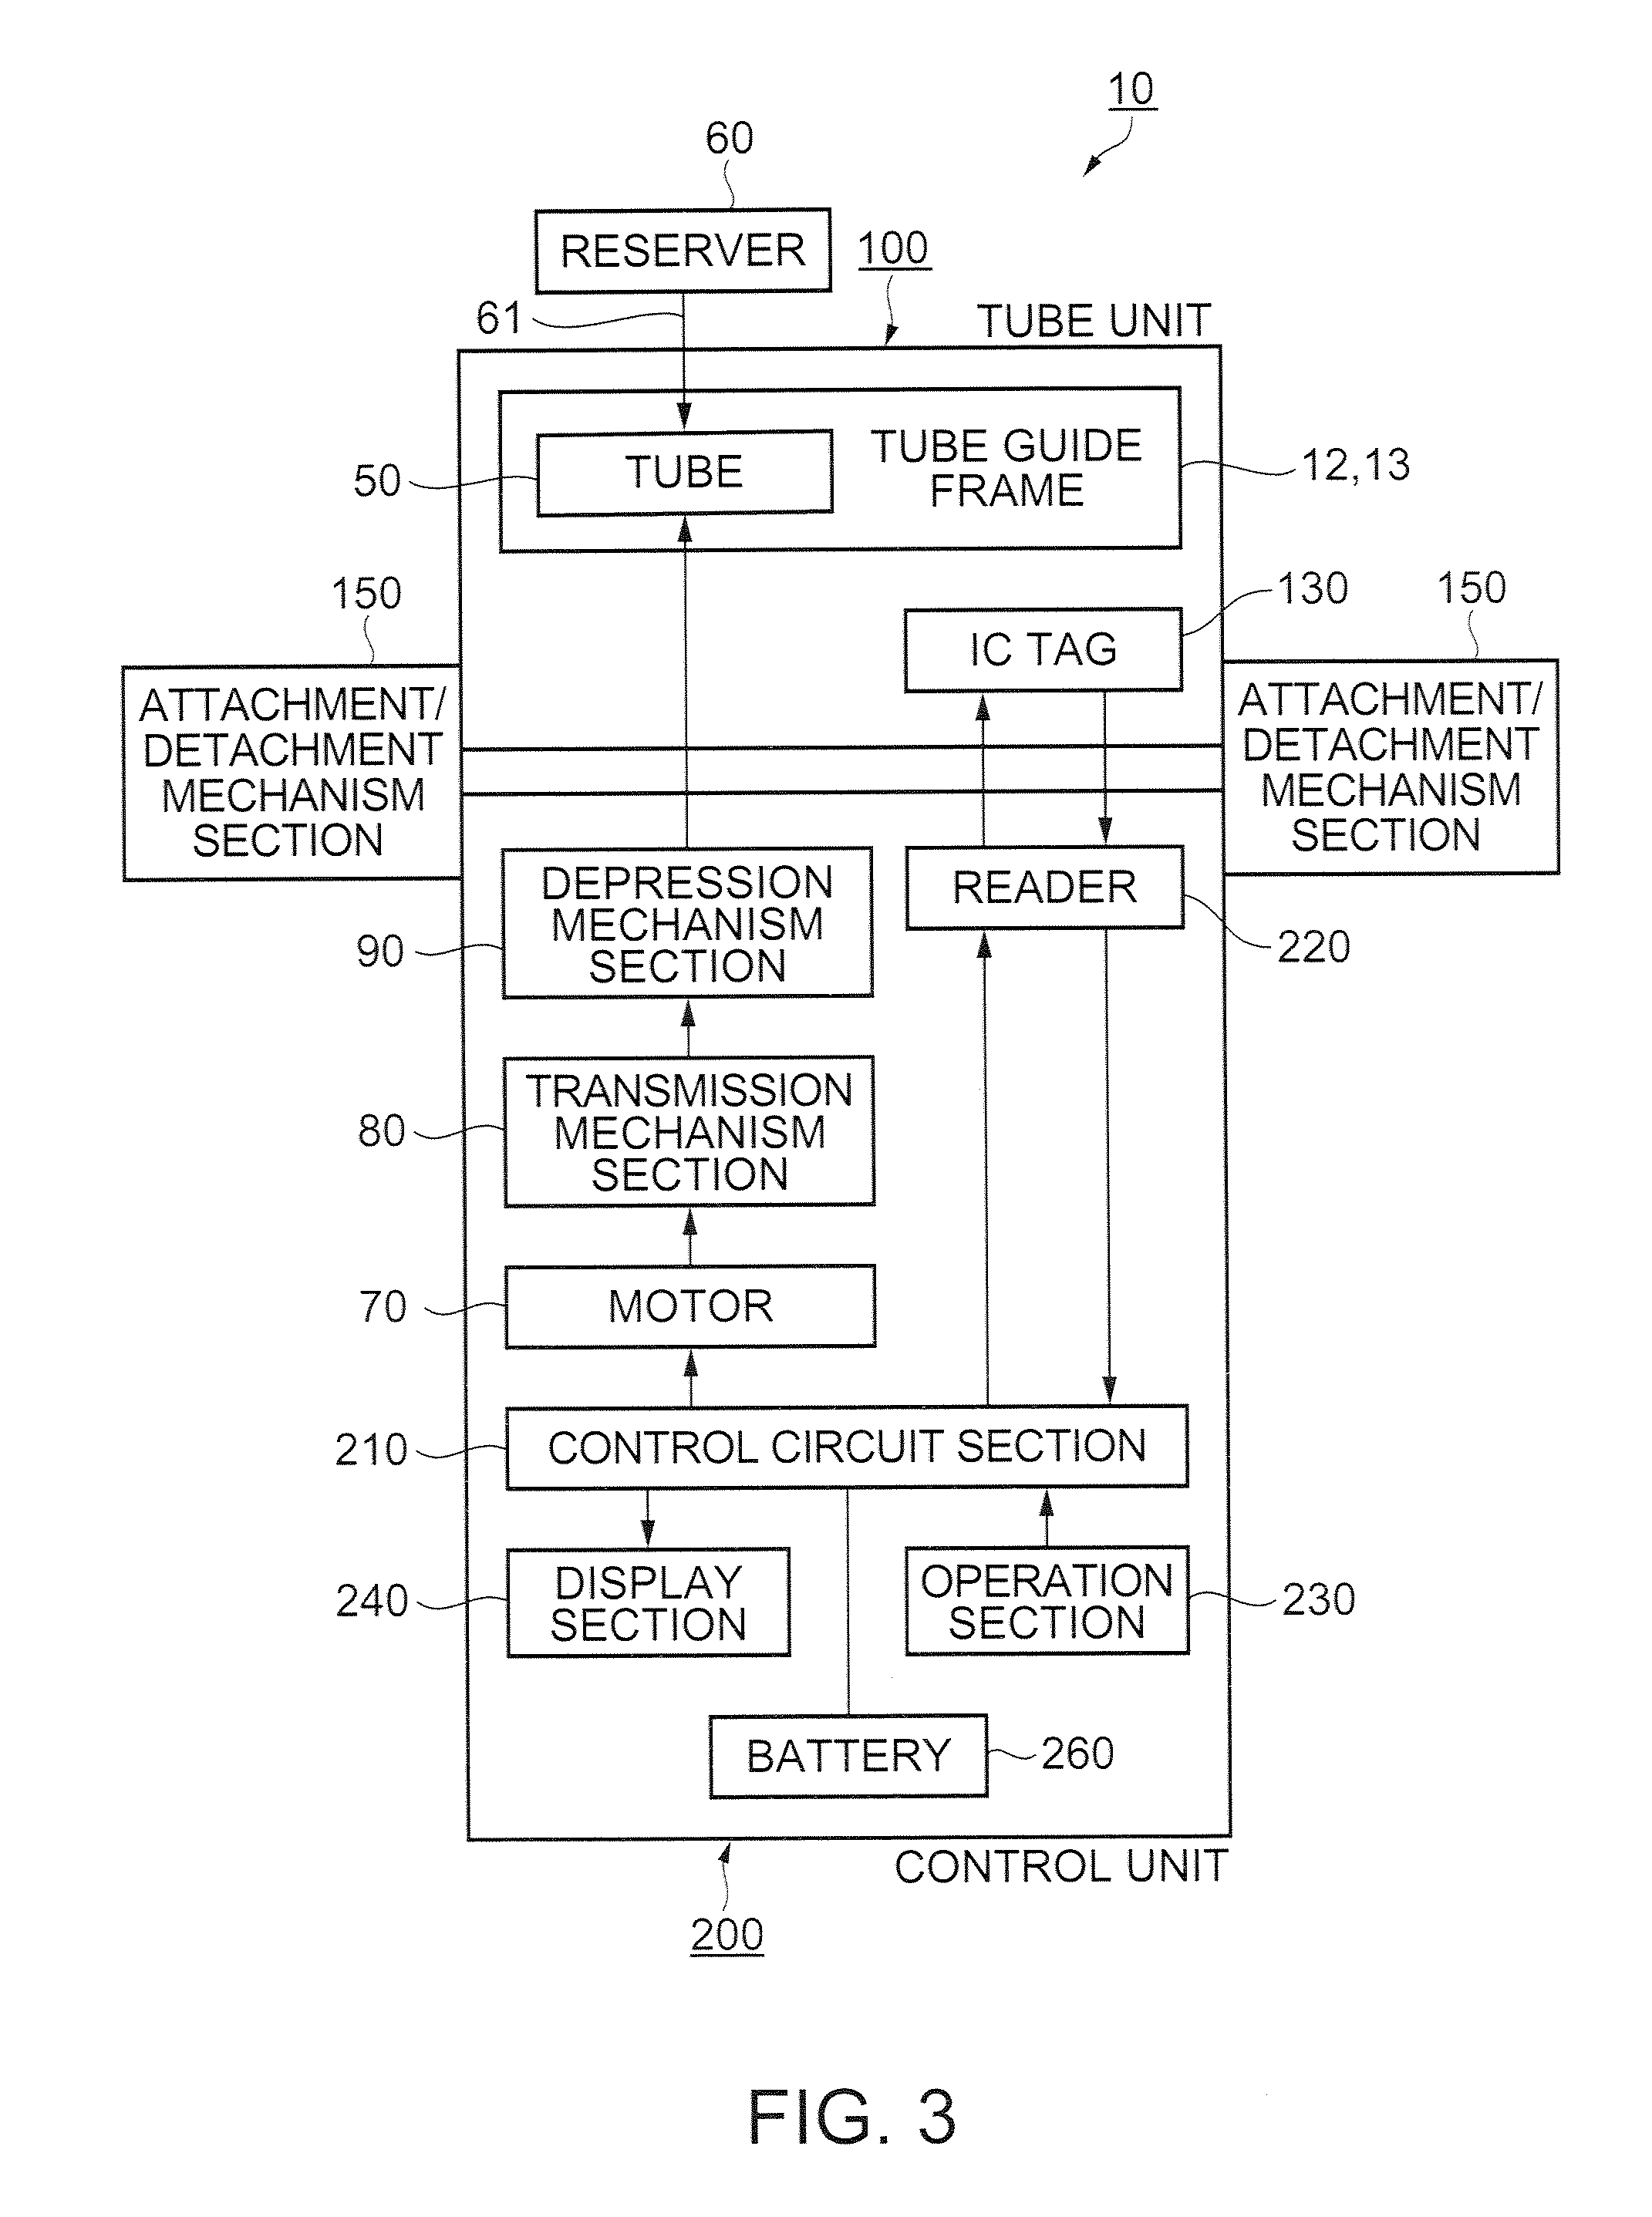 Mciropump, tube unit, and control unit